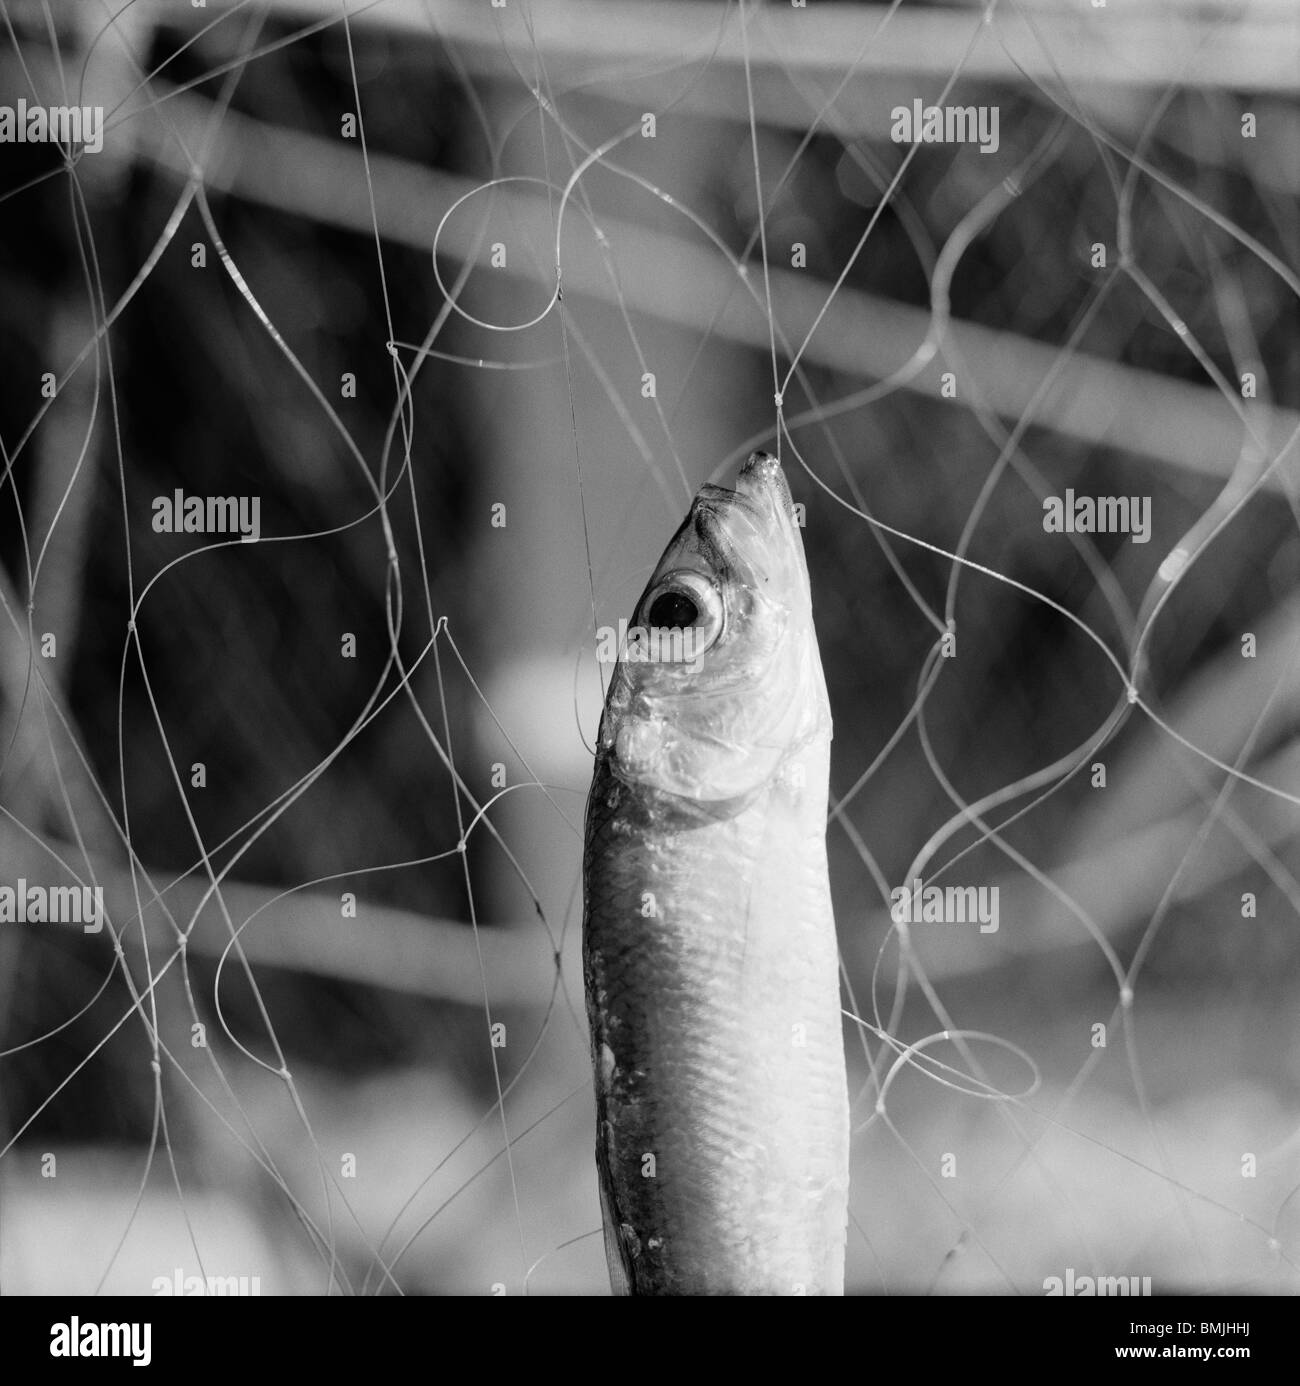 Herring fish net Black and White Stock Photos & Images - Alamy